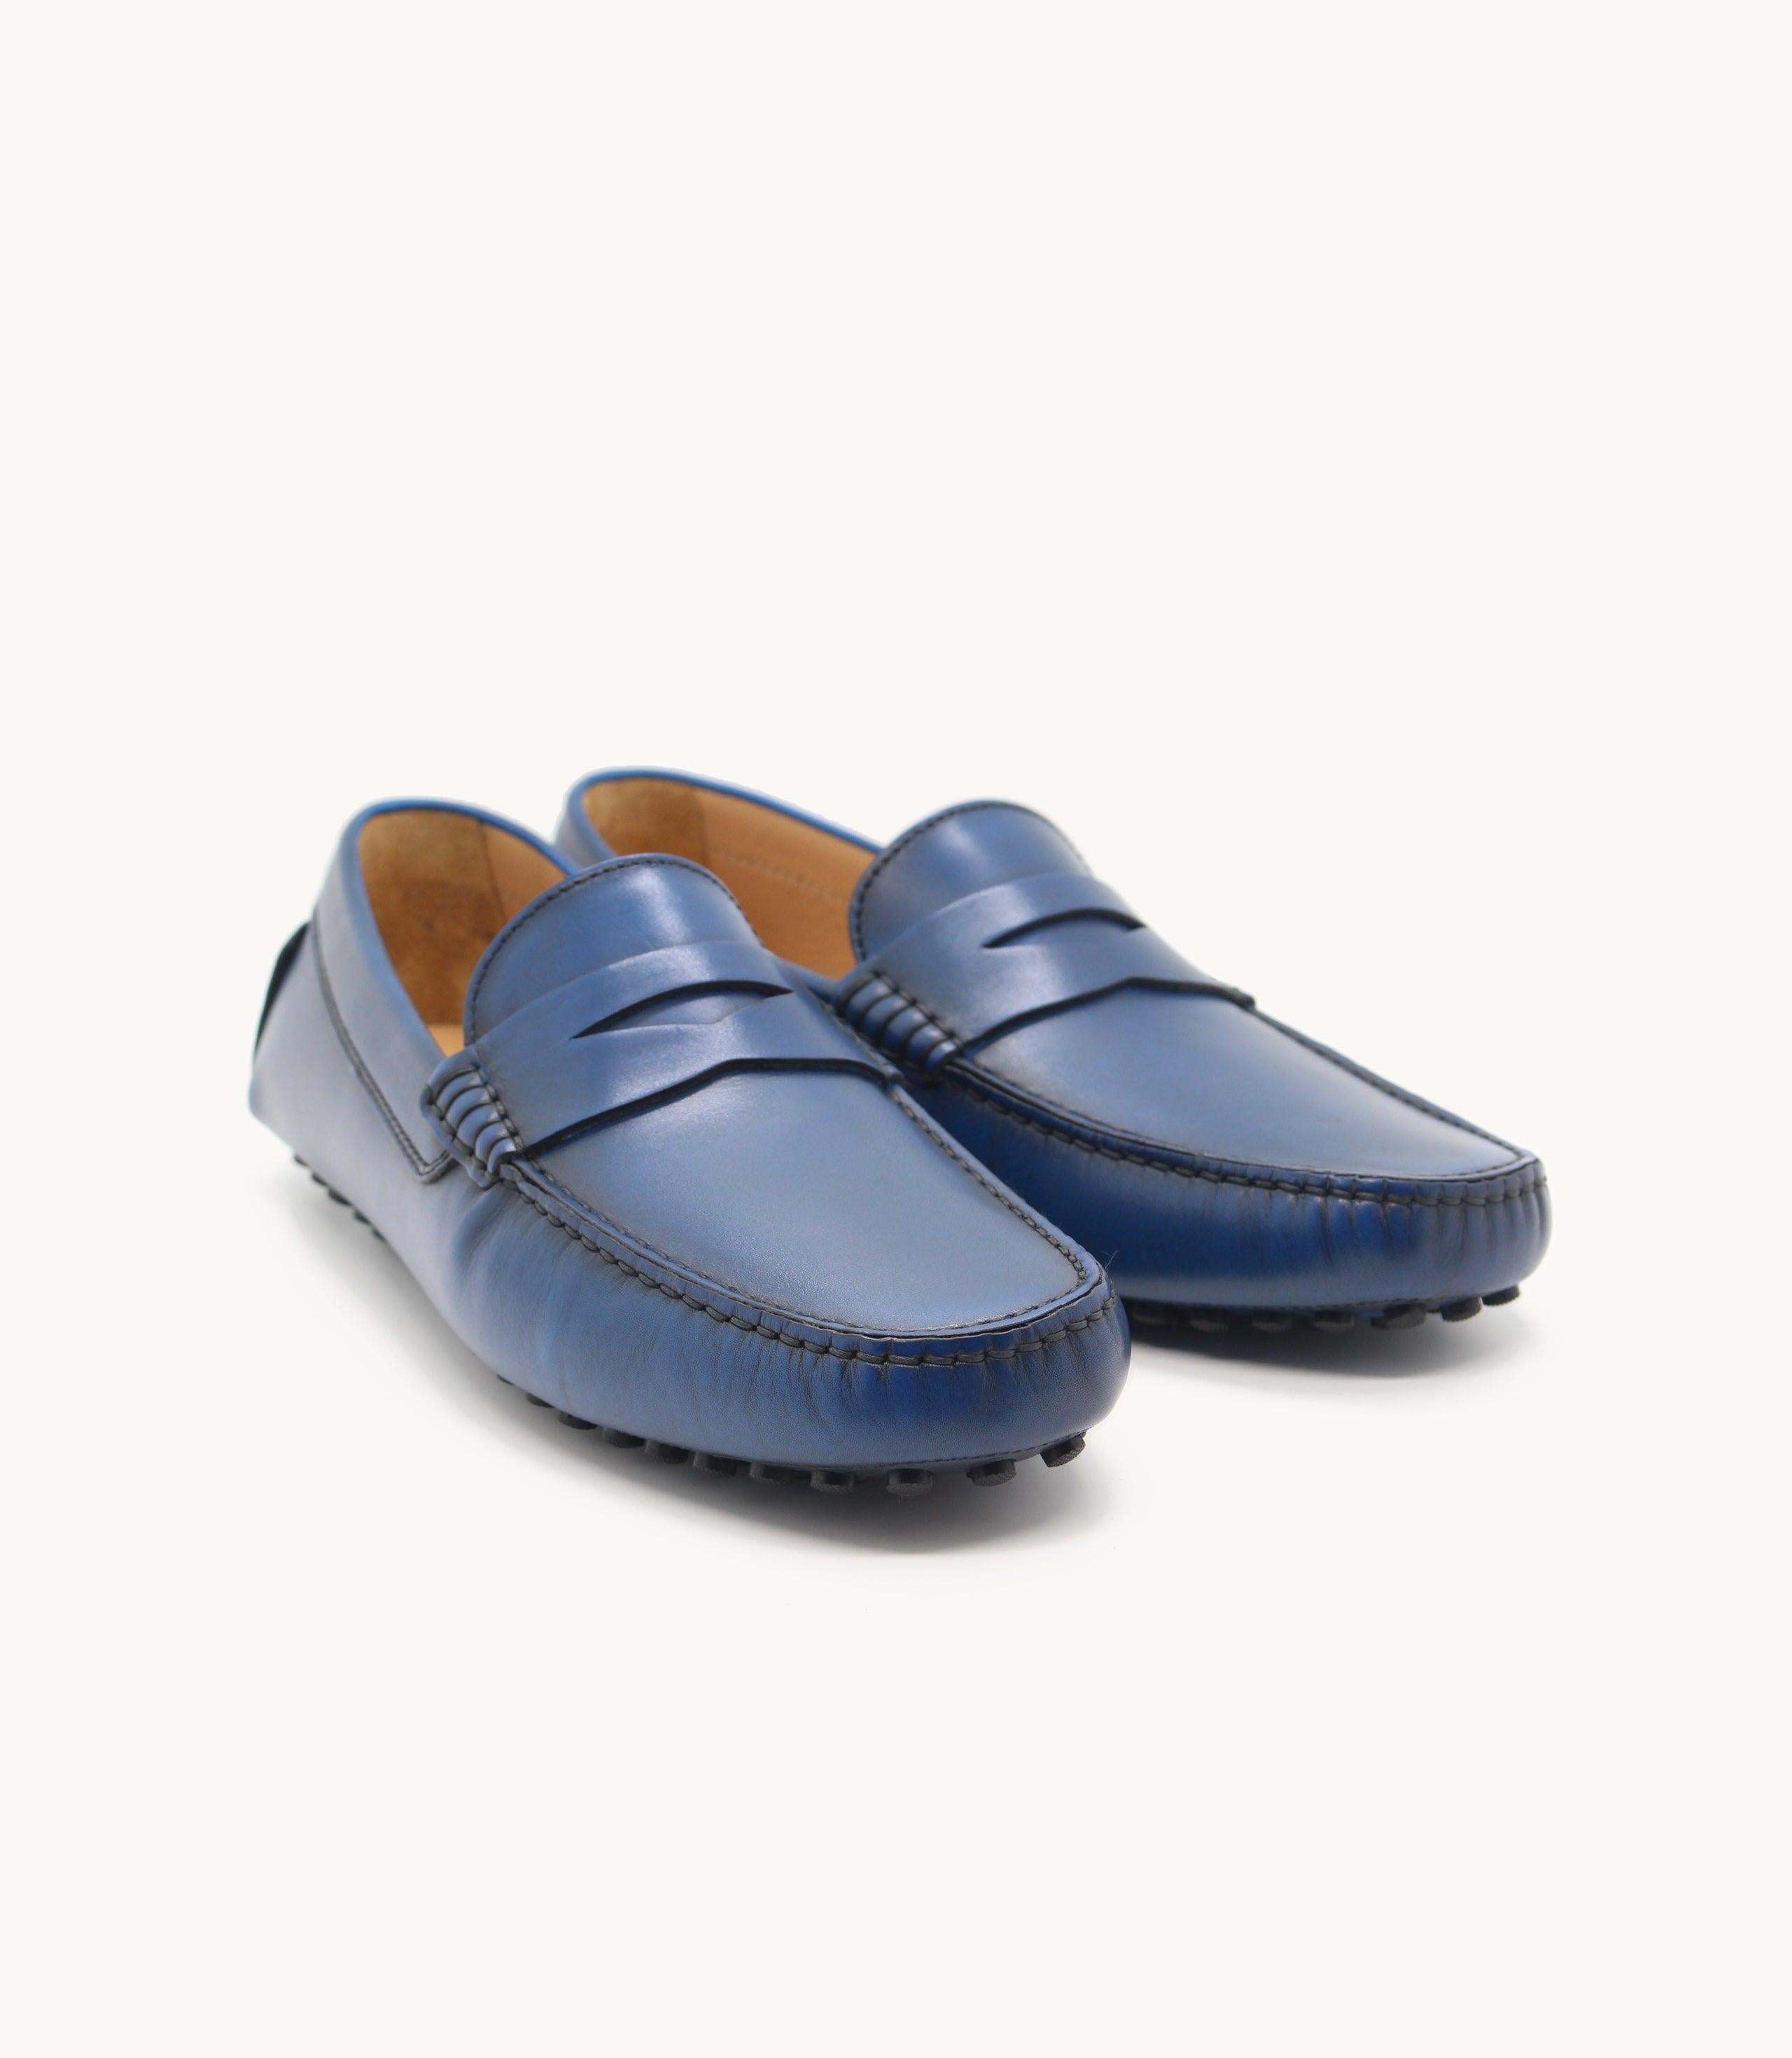 MANUEL II BLUE Gabriel Shoes